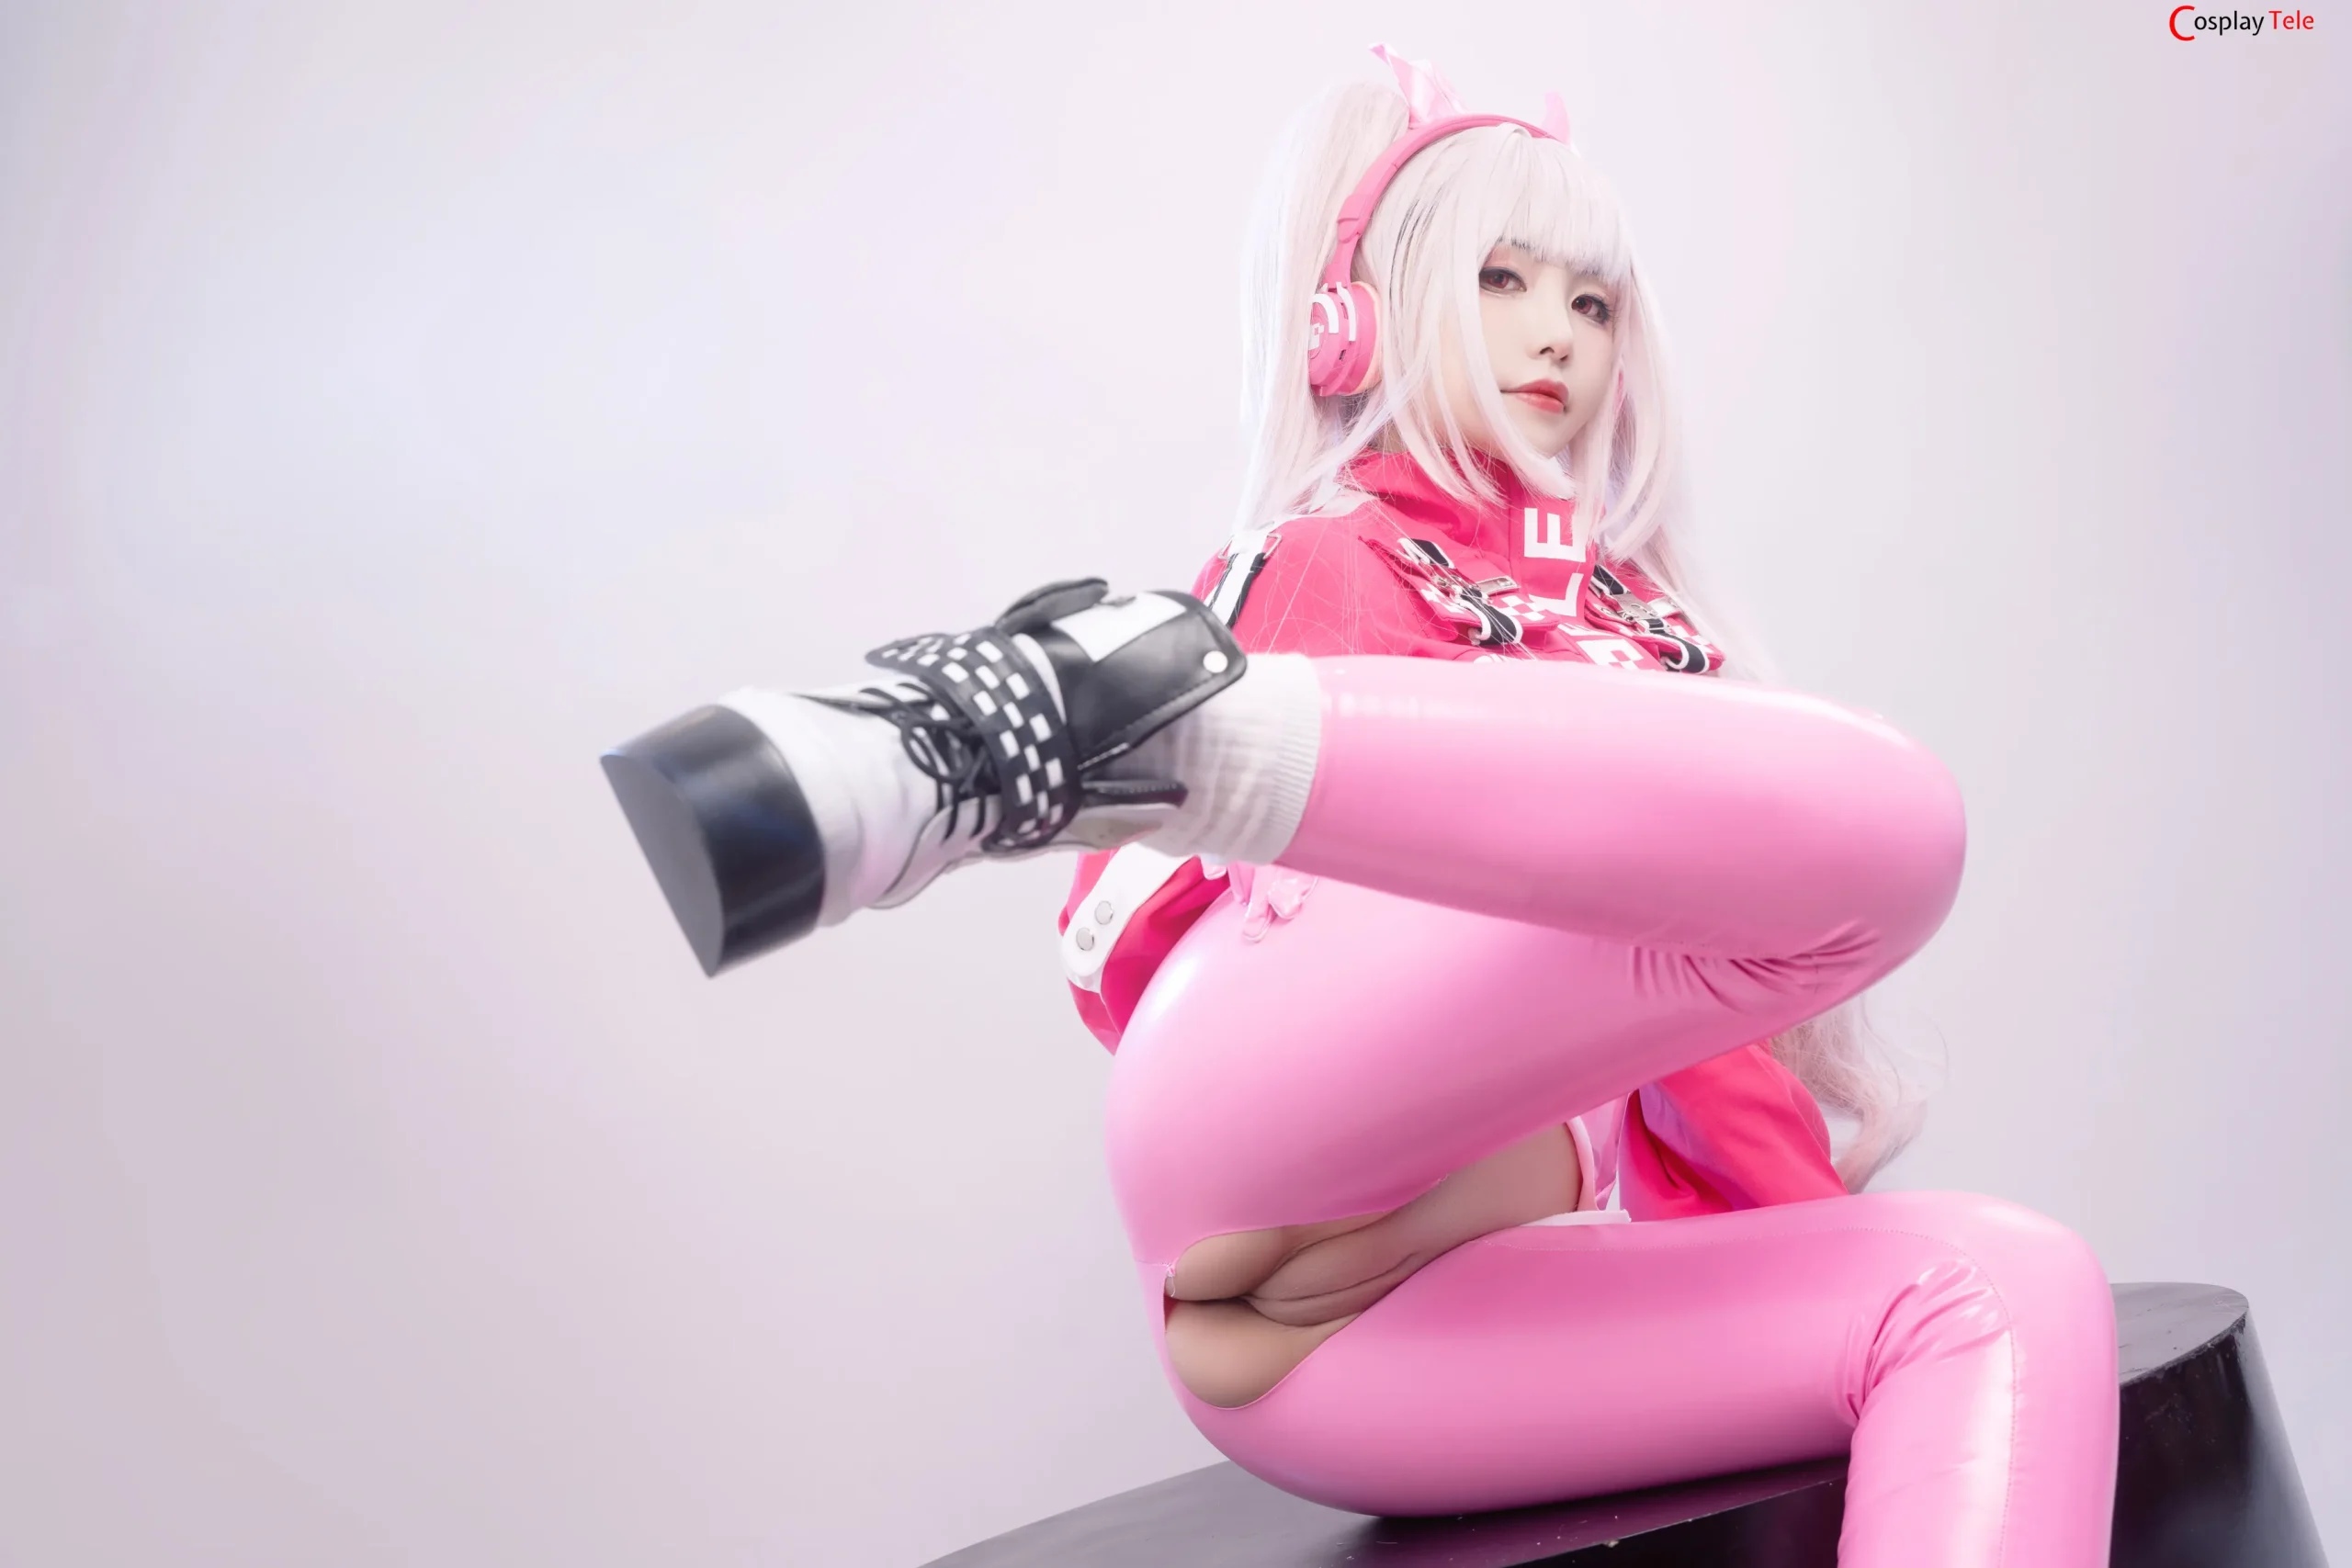 Nekokoyoshi (爆机少女喵小吉) cosplay Alice - NIKEE "78 photos and 2 videos"